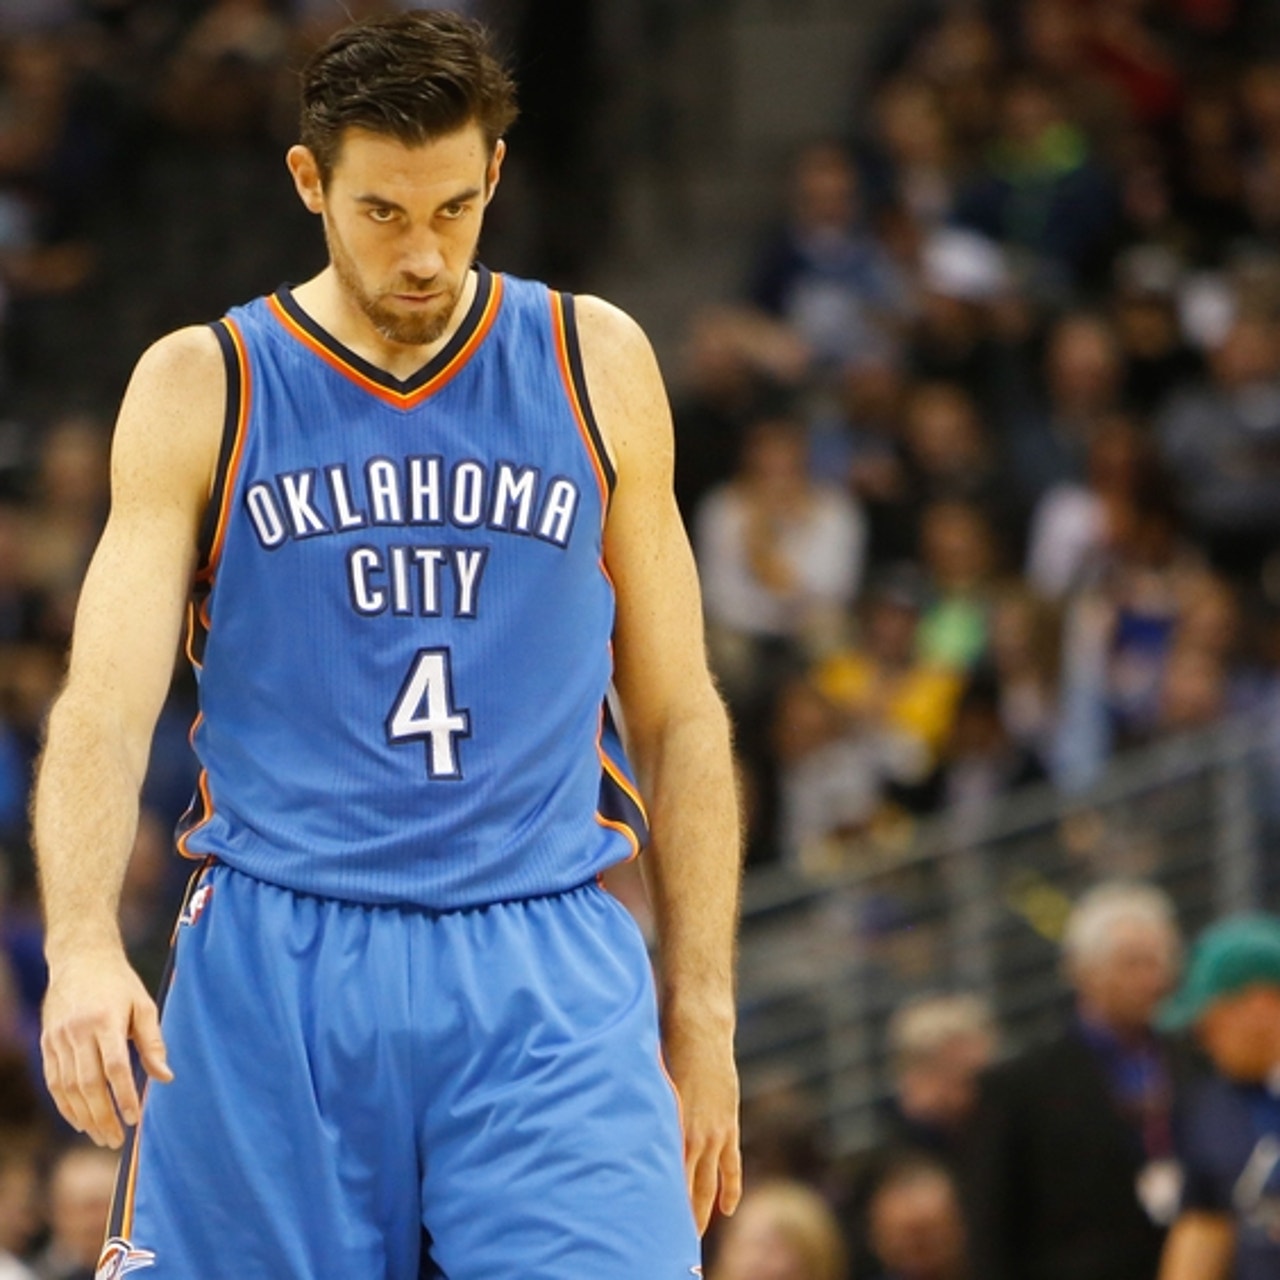 NBA: Oklahoma City Thunder retire Iowan Nick Collison's jersey